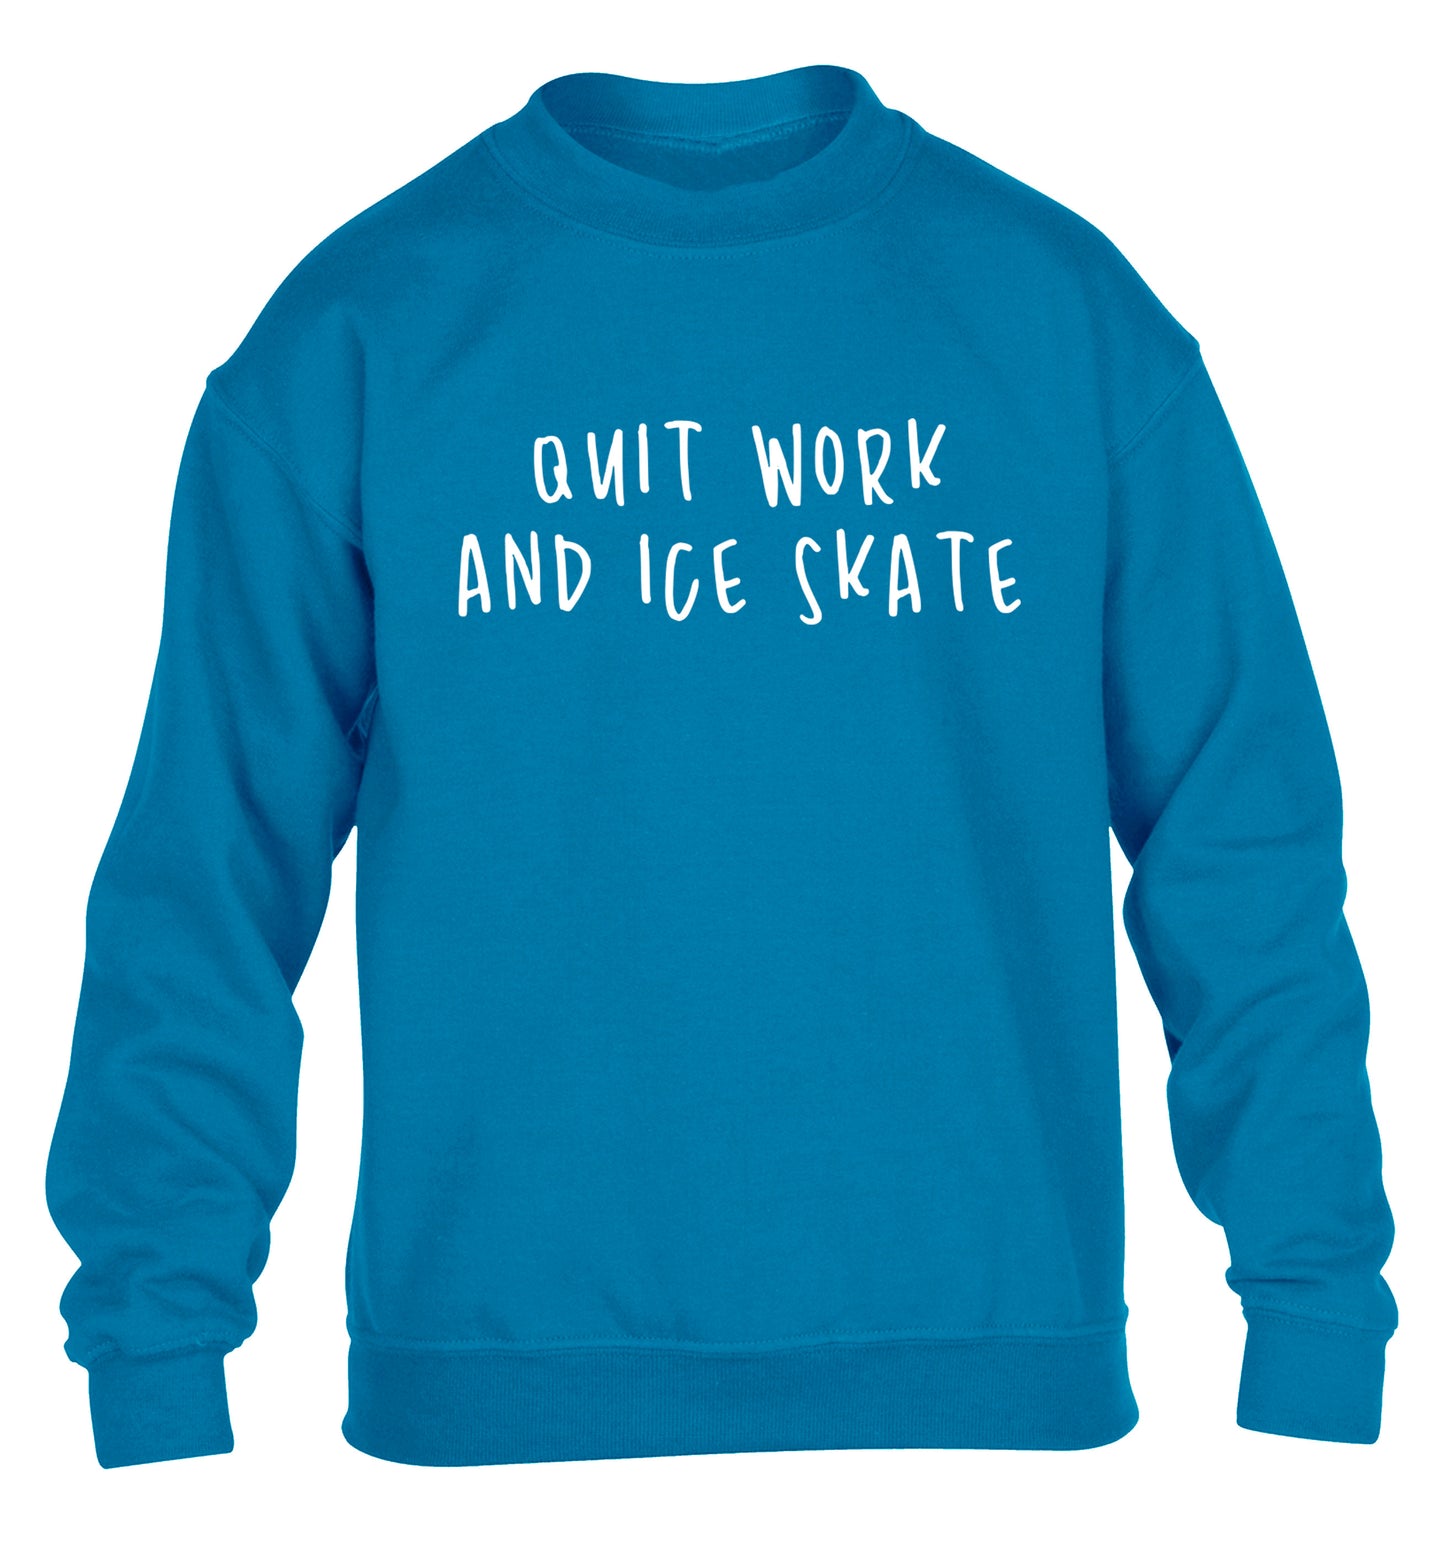 Quit work ice skate children's blue sweater 12-14 Years